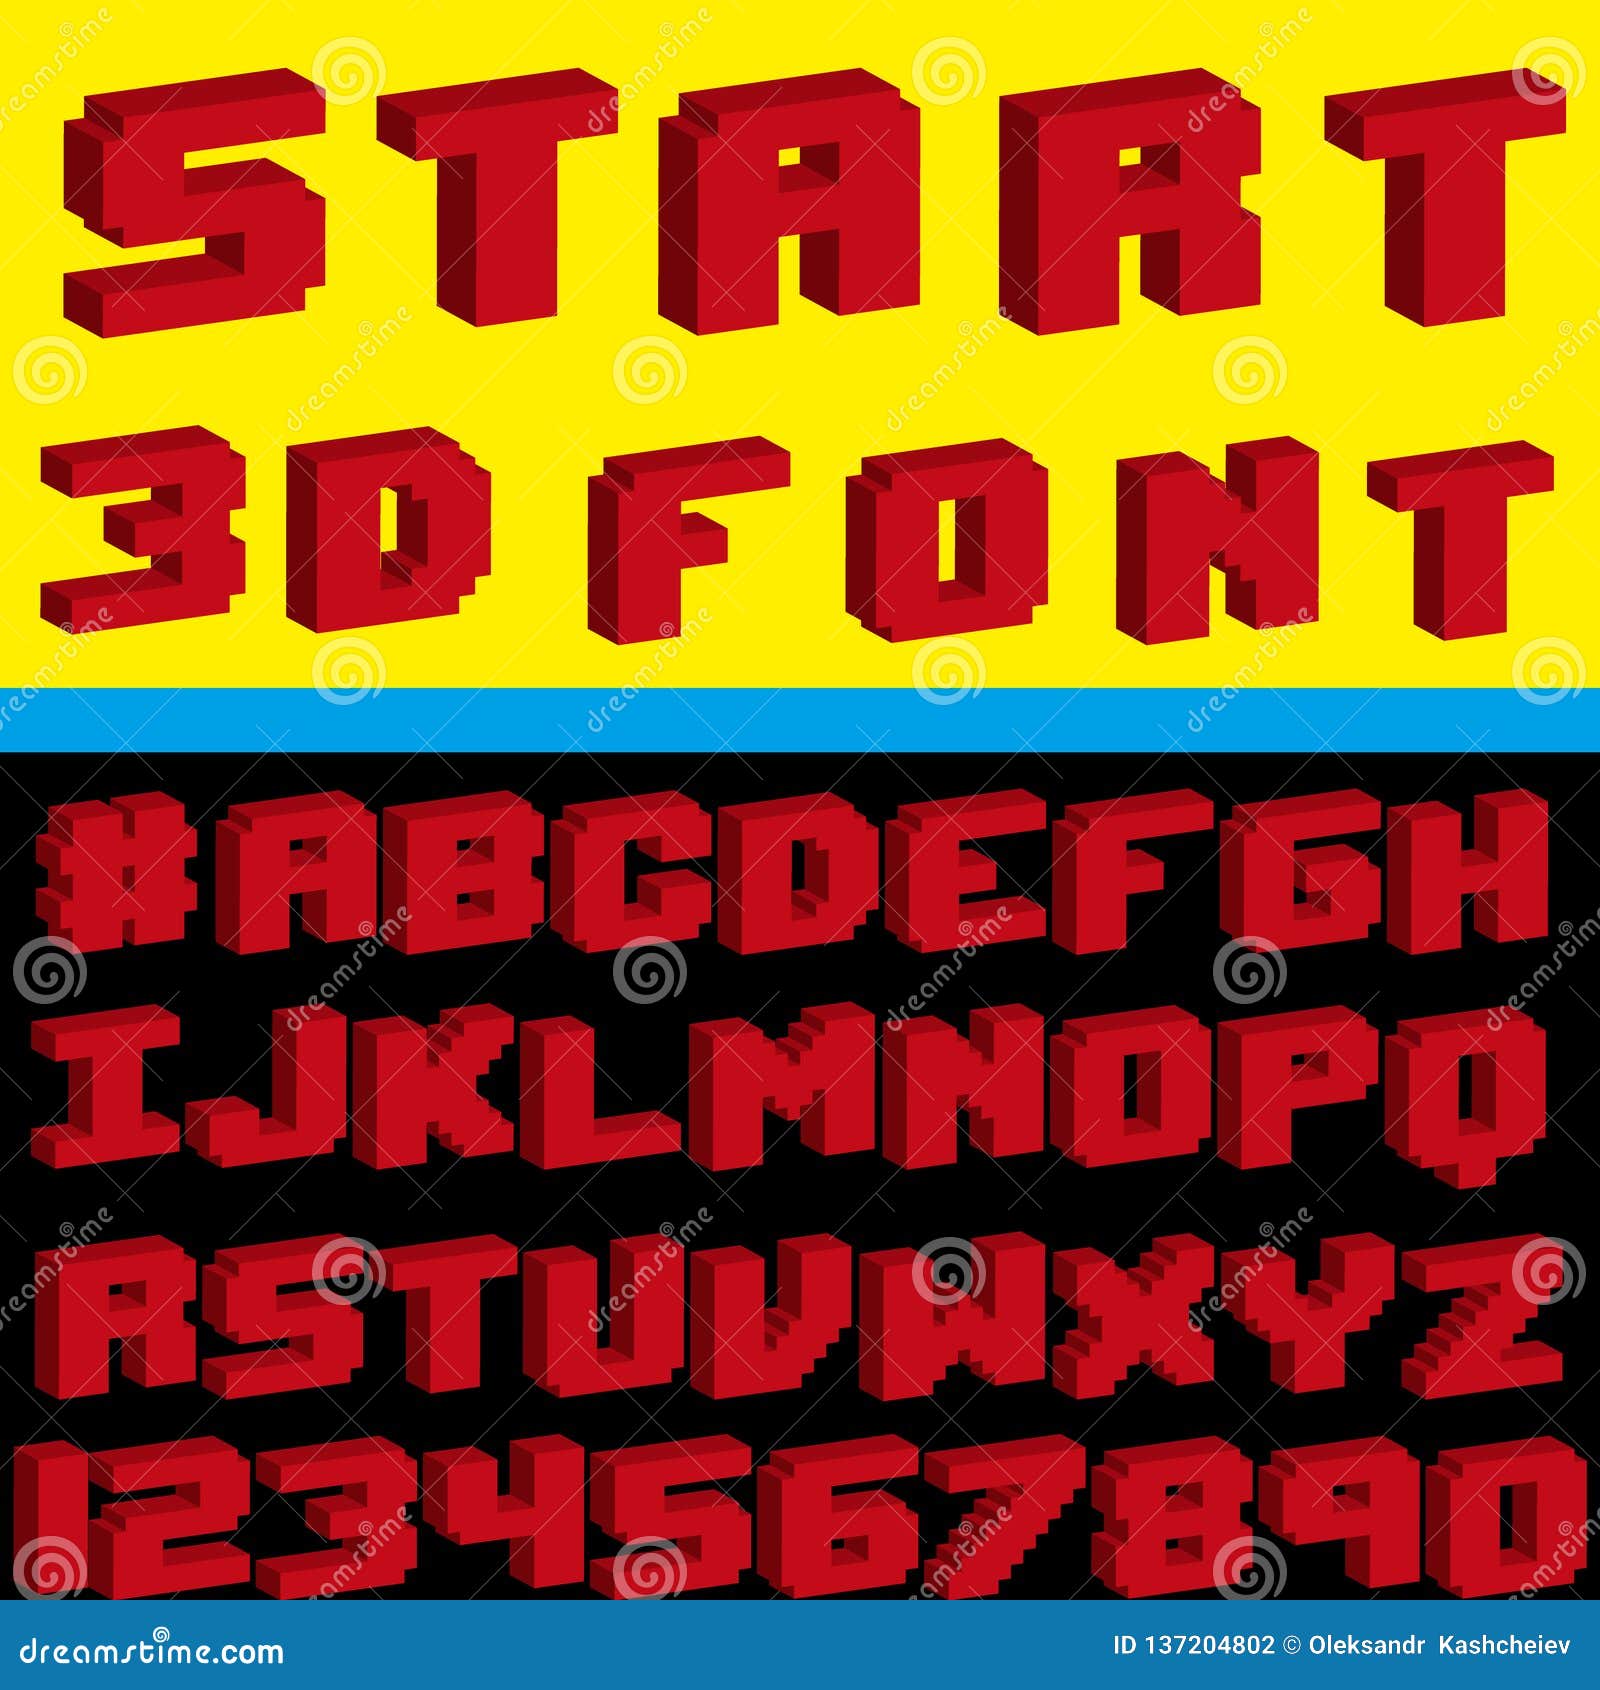 Download Pixel 3d Retro Red Font Video Computer Game Design 8 Bit ...